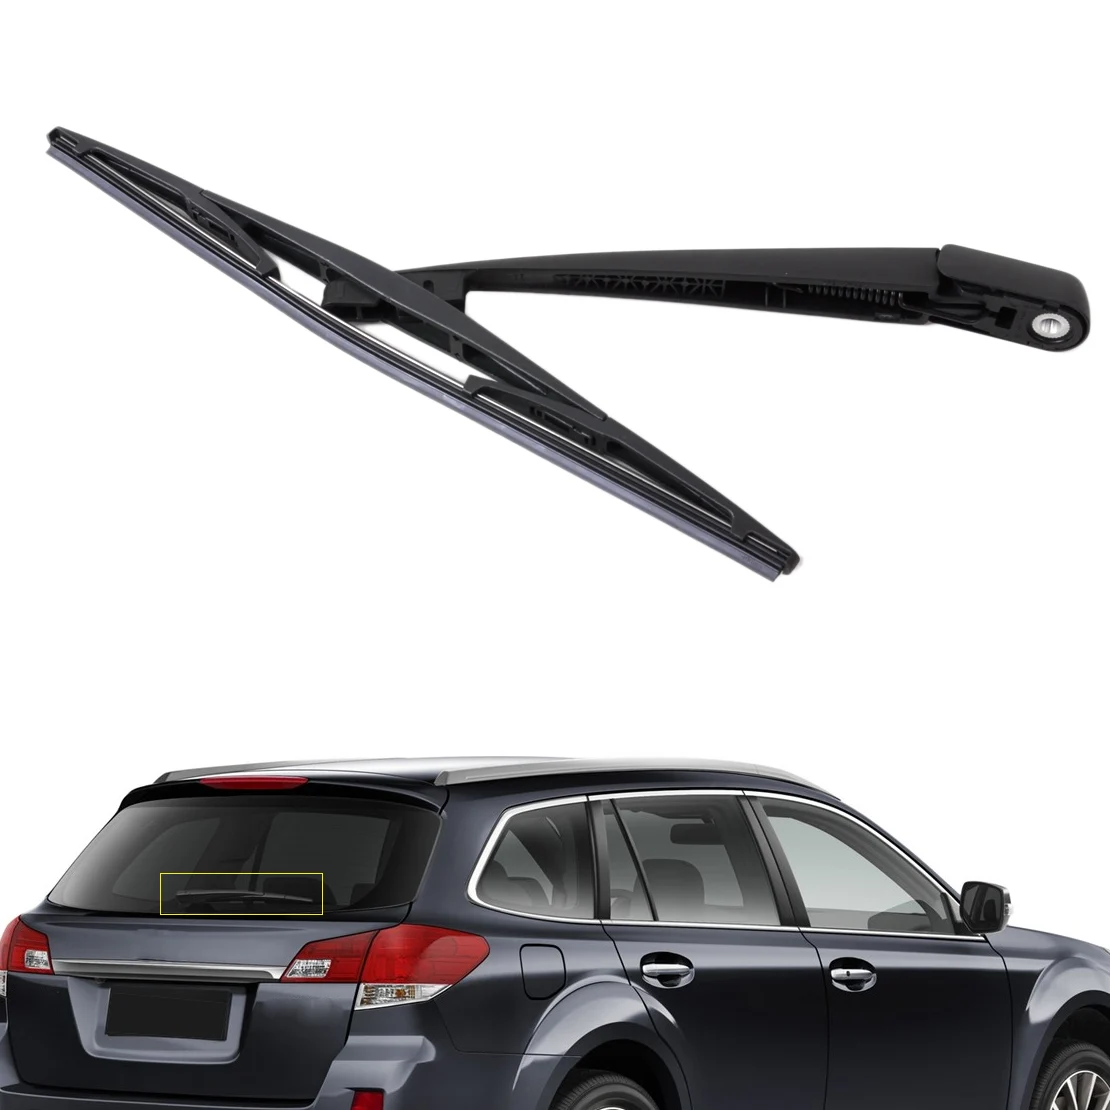 Beler-escobilla de brazo de limpiaparabrisas para ventana trasera, alta calidad, para Subaru Impreza Forester Legacy Outback, precio al por mayor